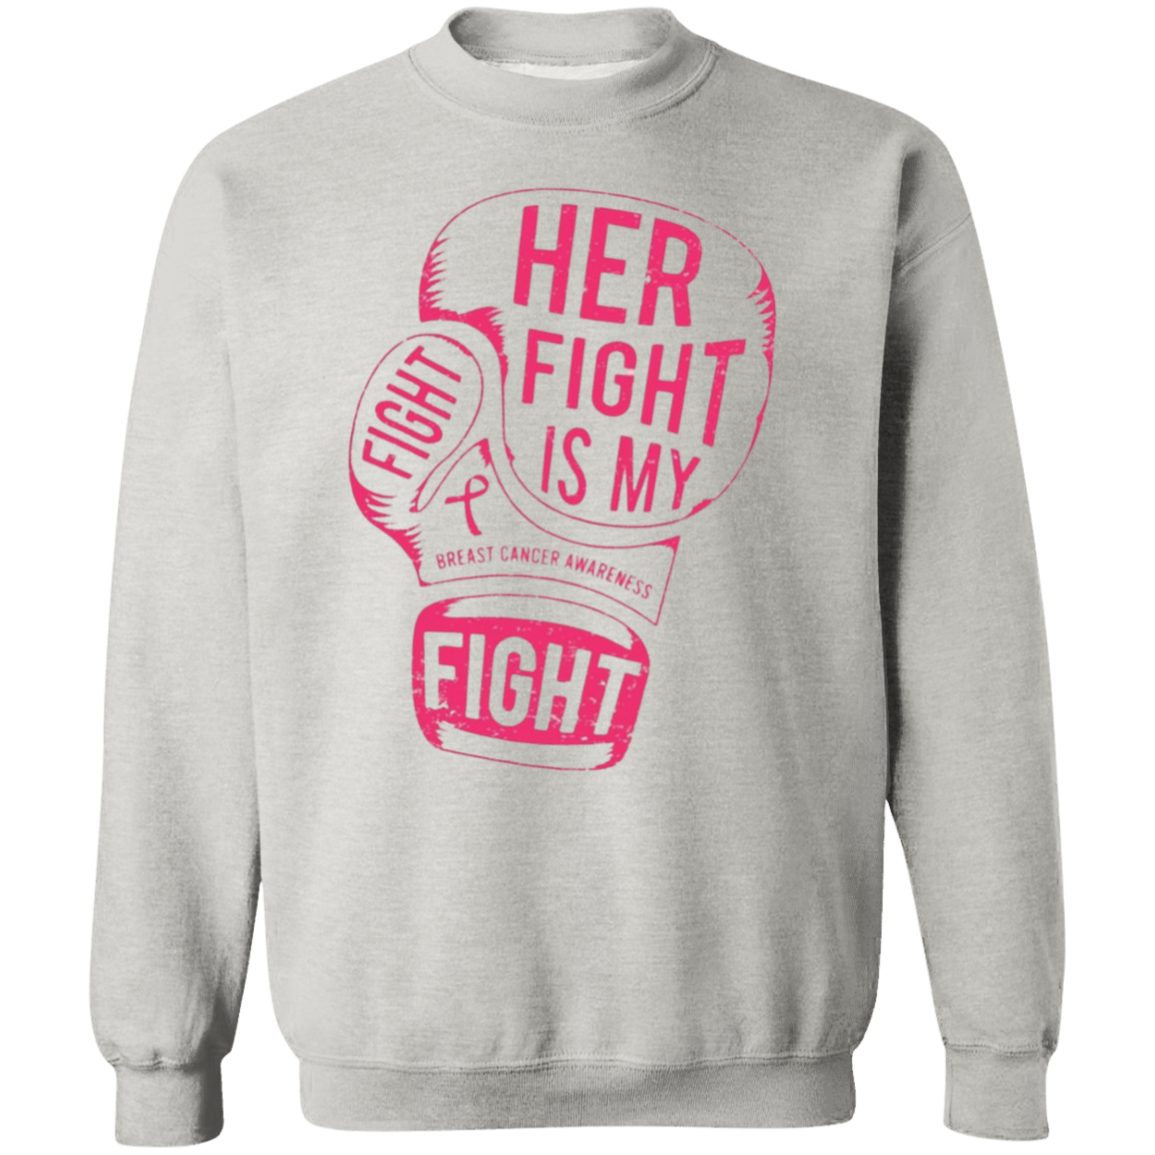 Her Fight is My Fight Sweatshirt